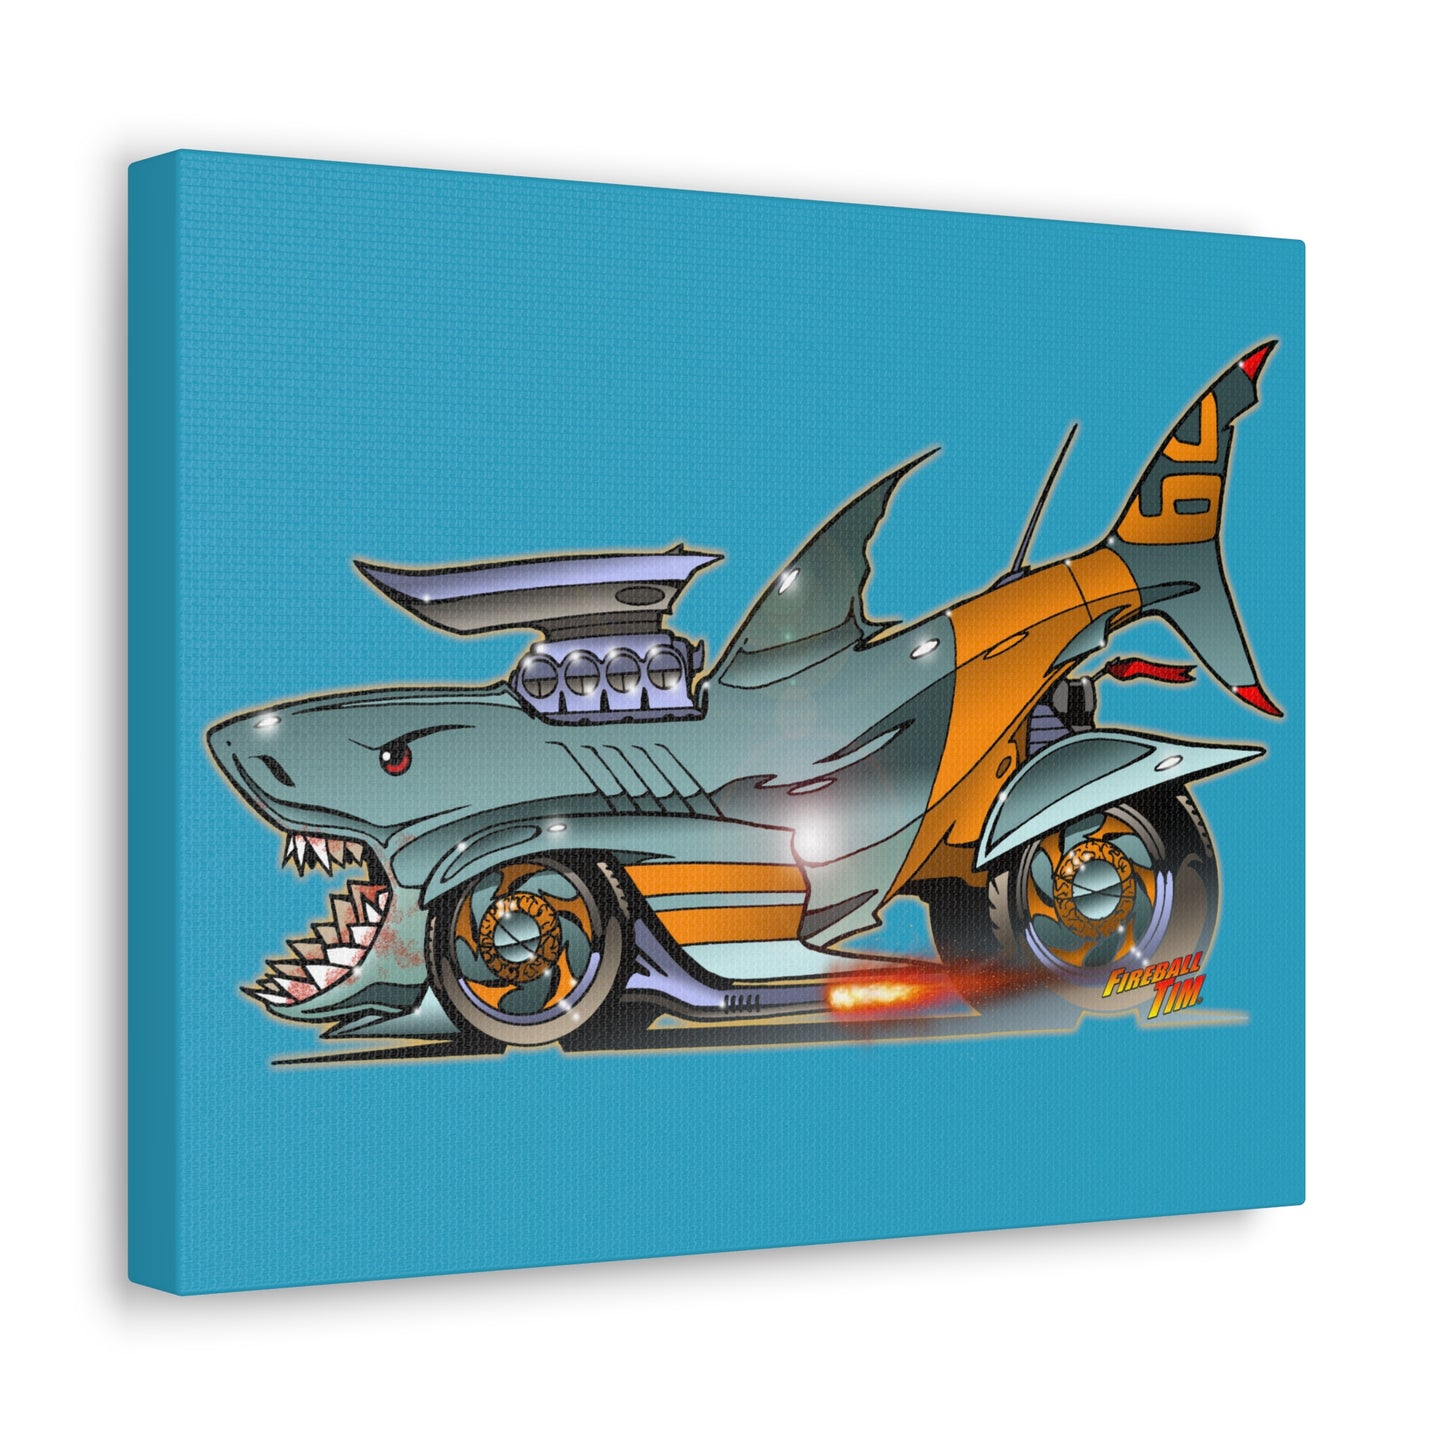 MANEATER GREAT WHITE SHARK Sealife Hot Rod Canvas Gallery Art Print 11x14